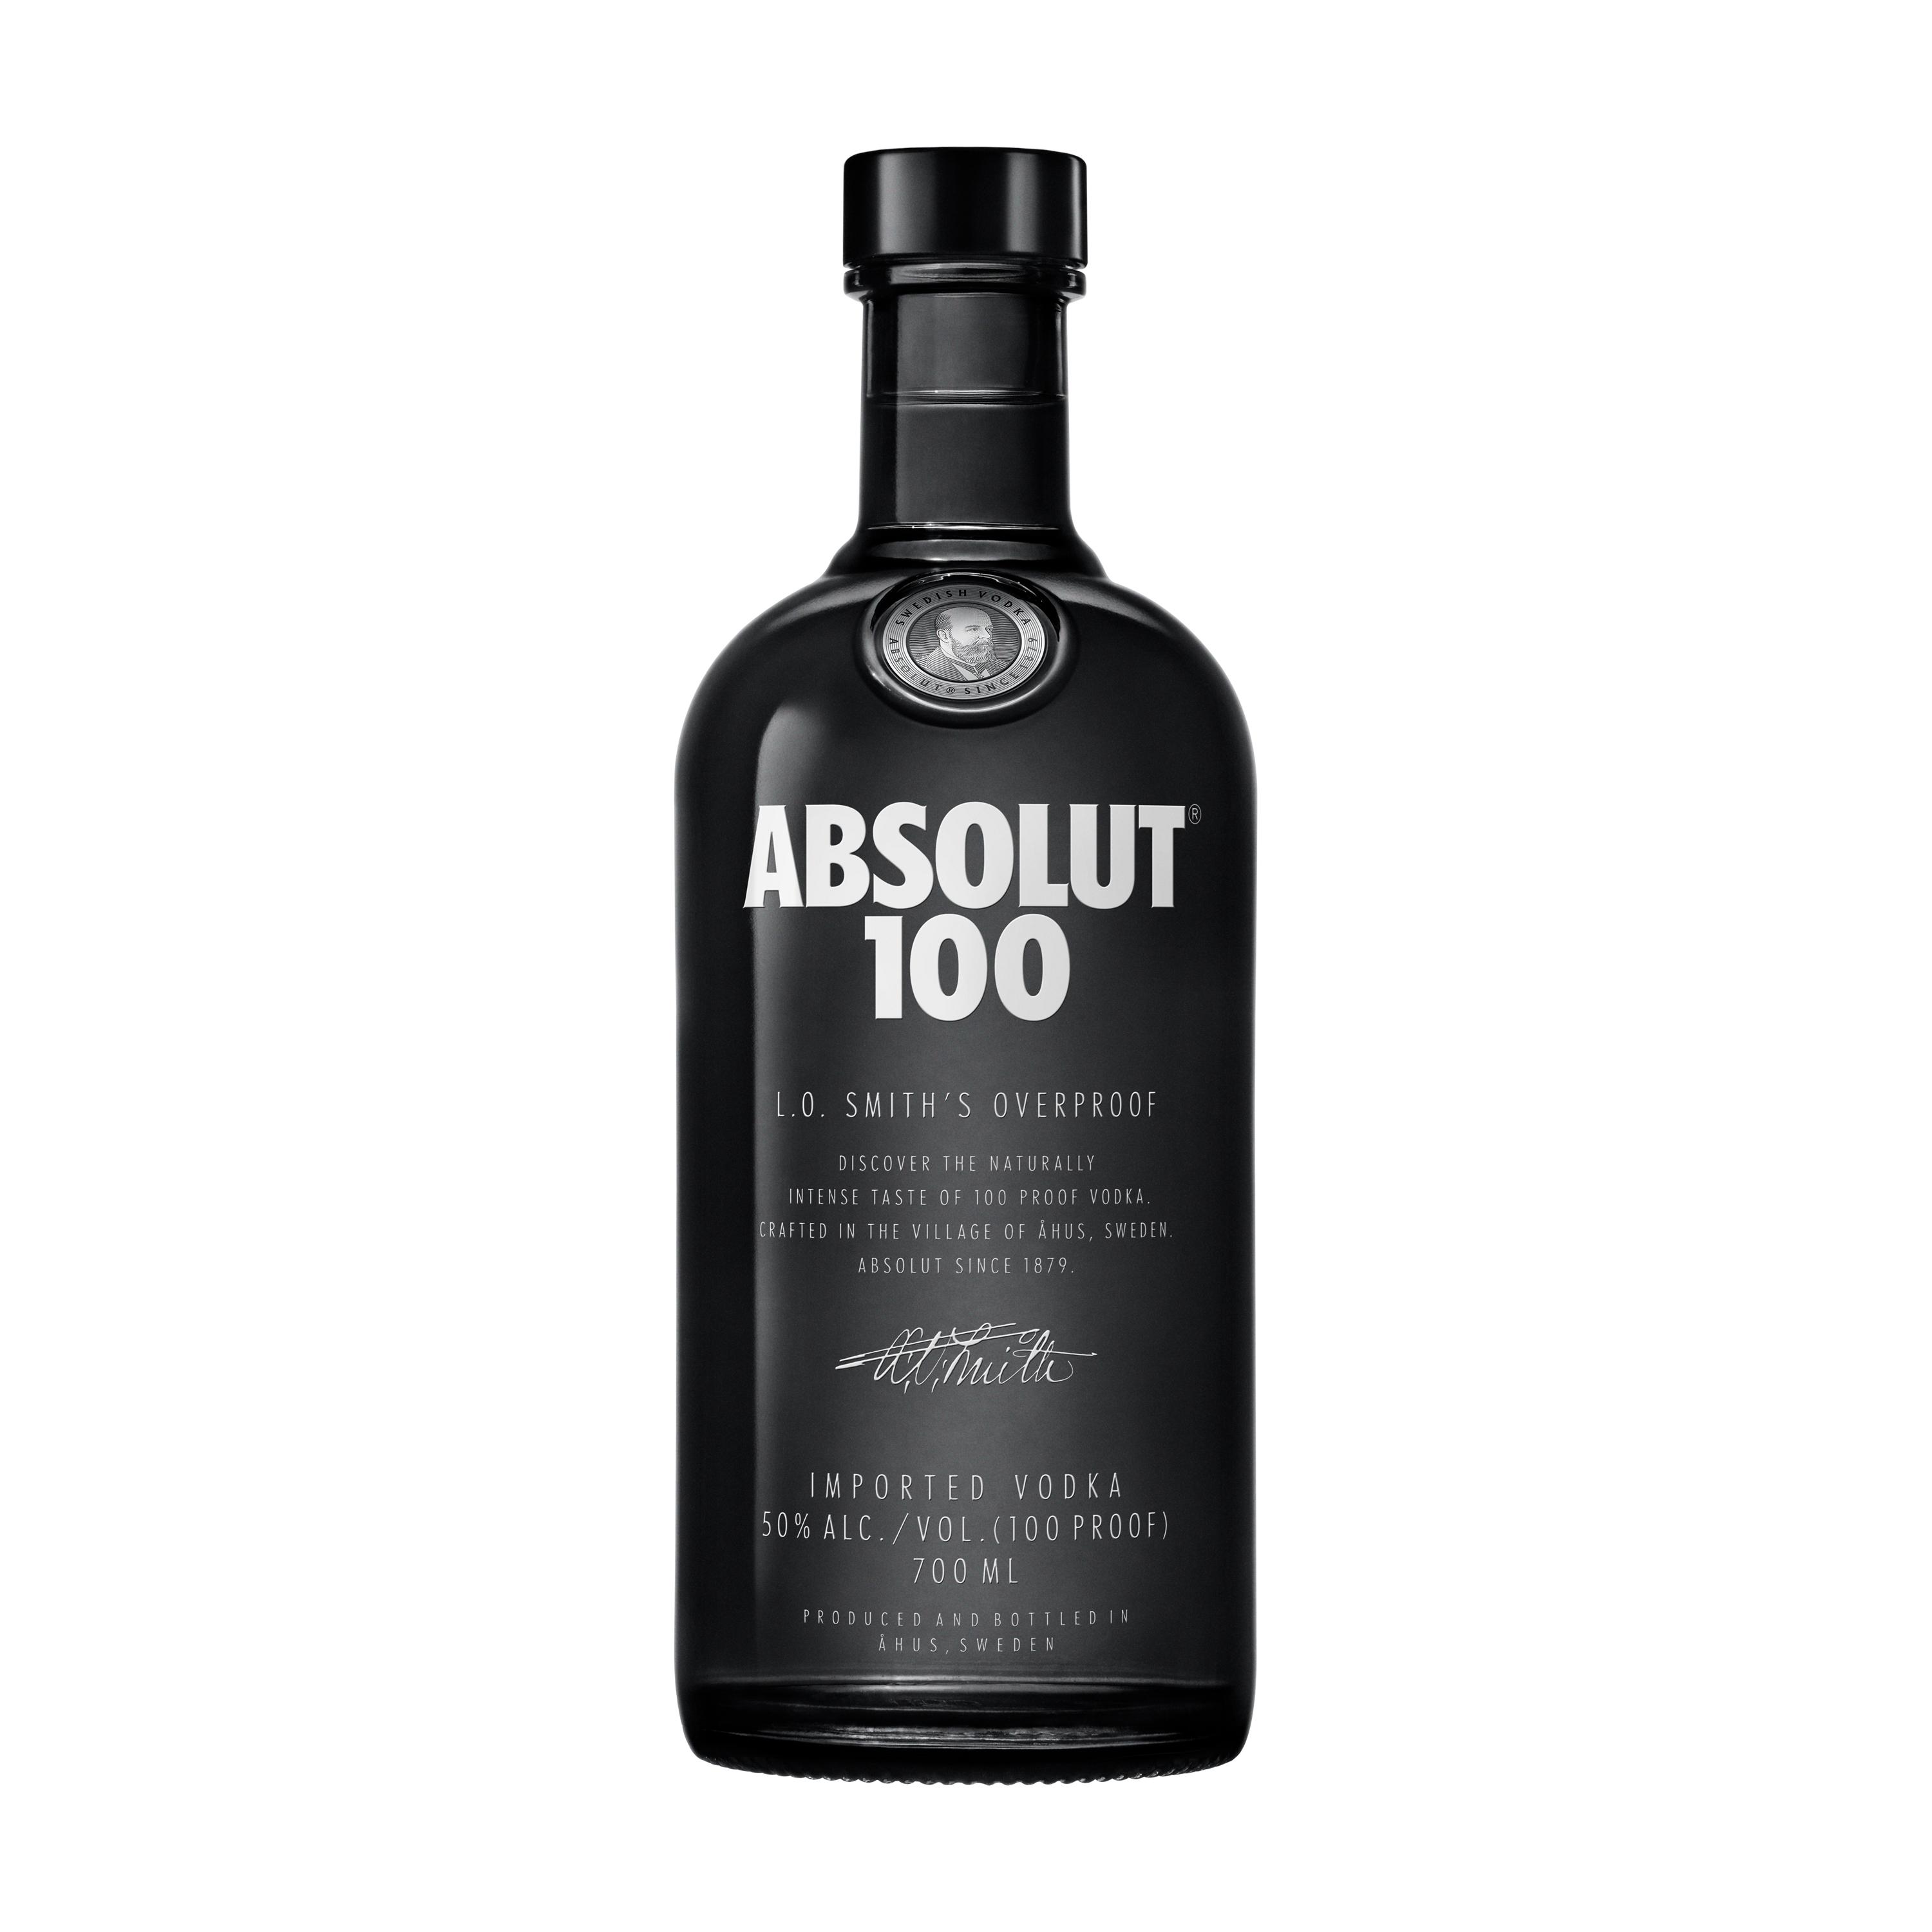 Absolut Vodka 100